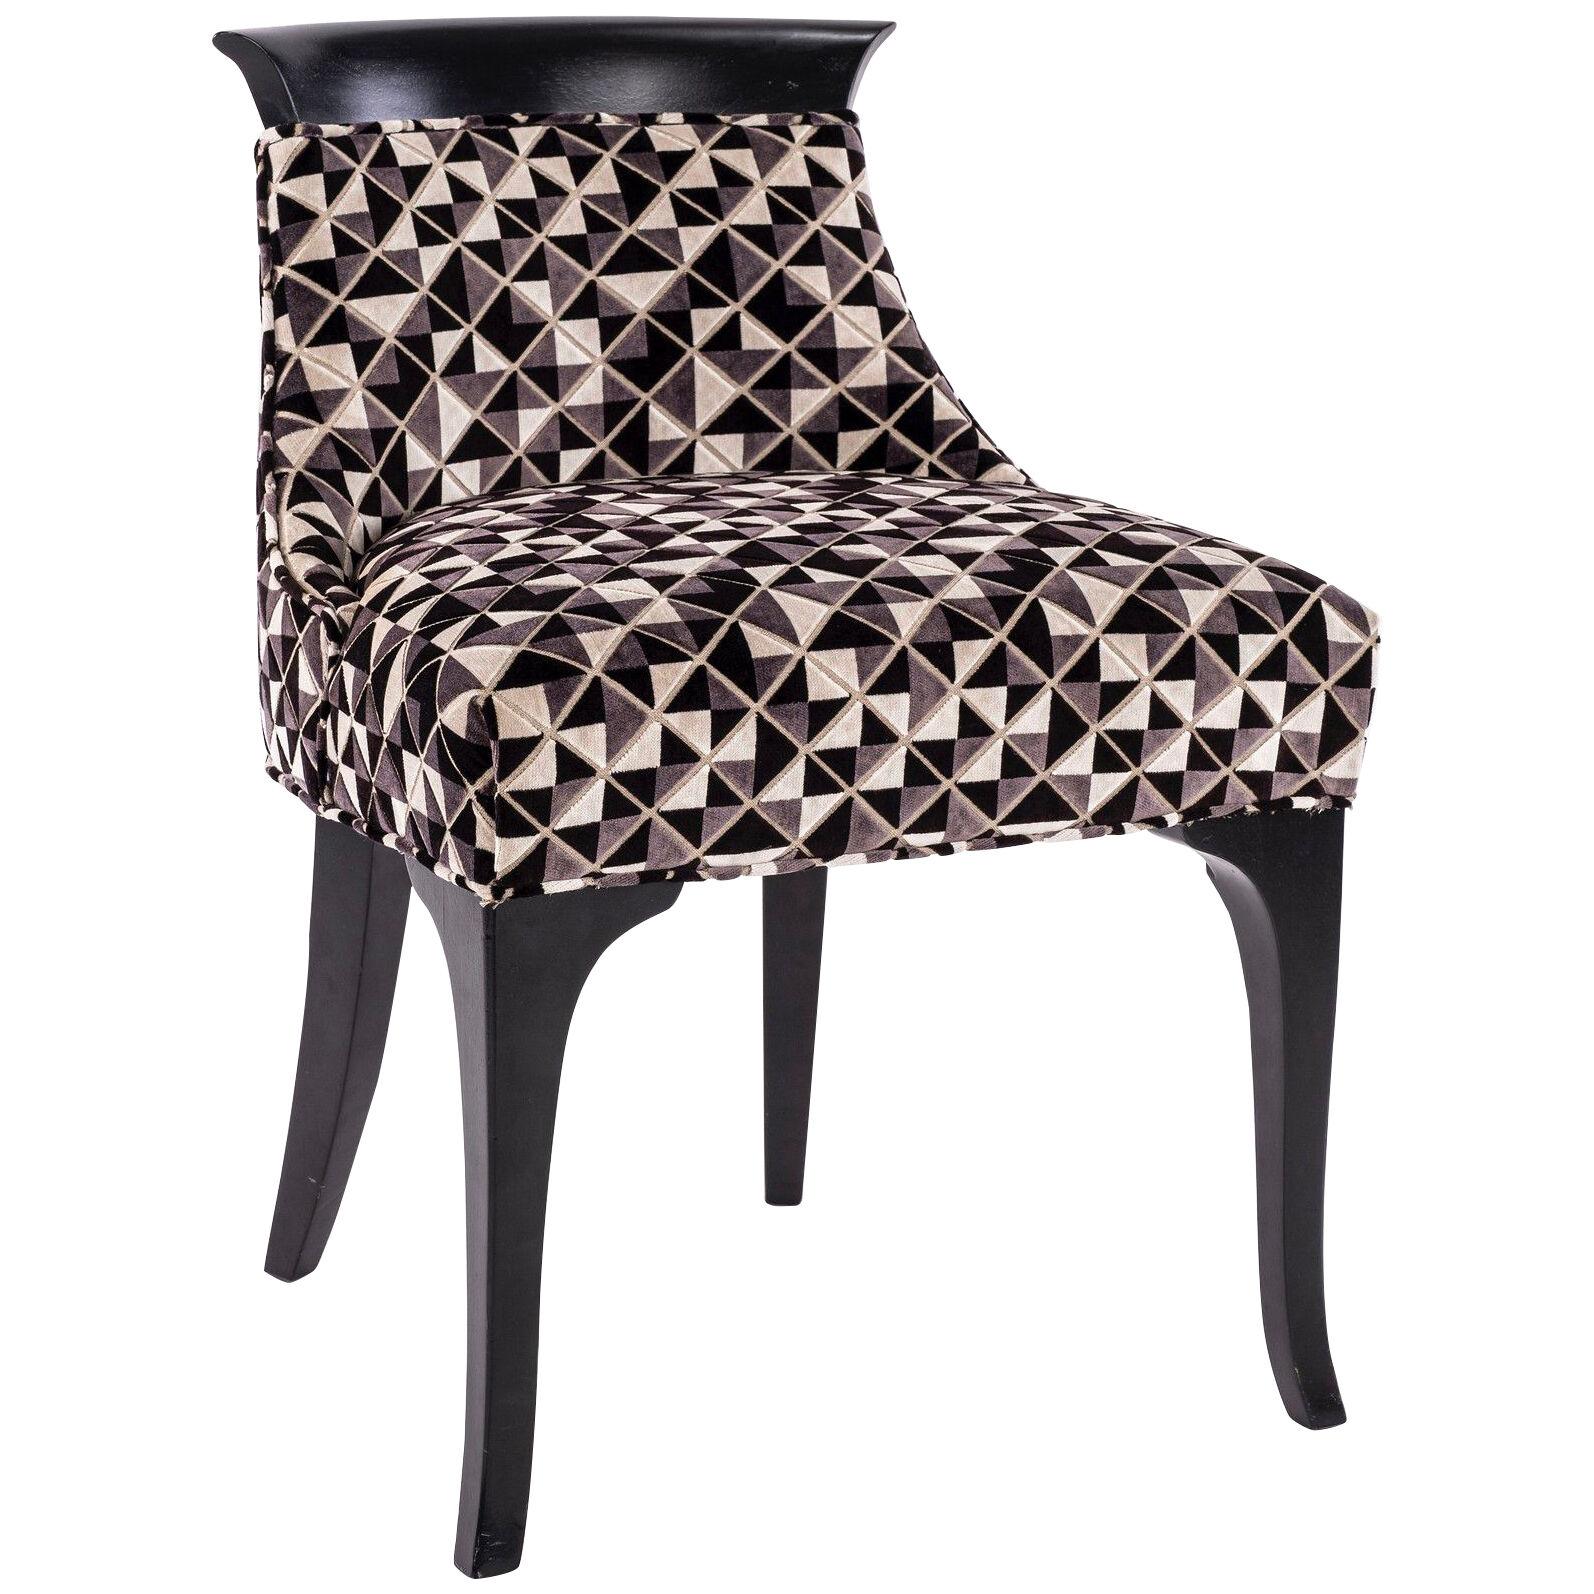 Black and White Slipper Chair